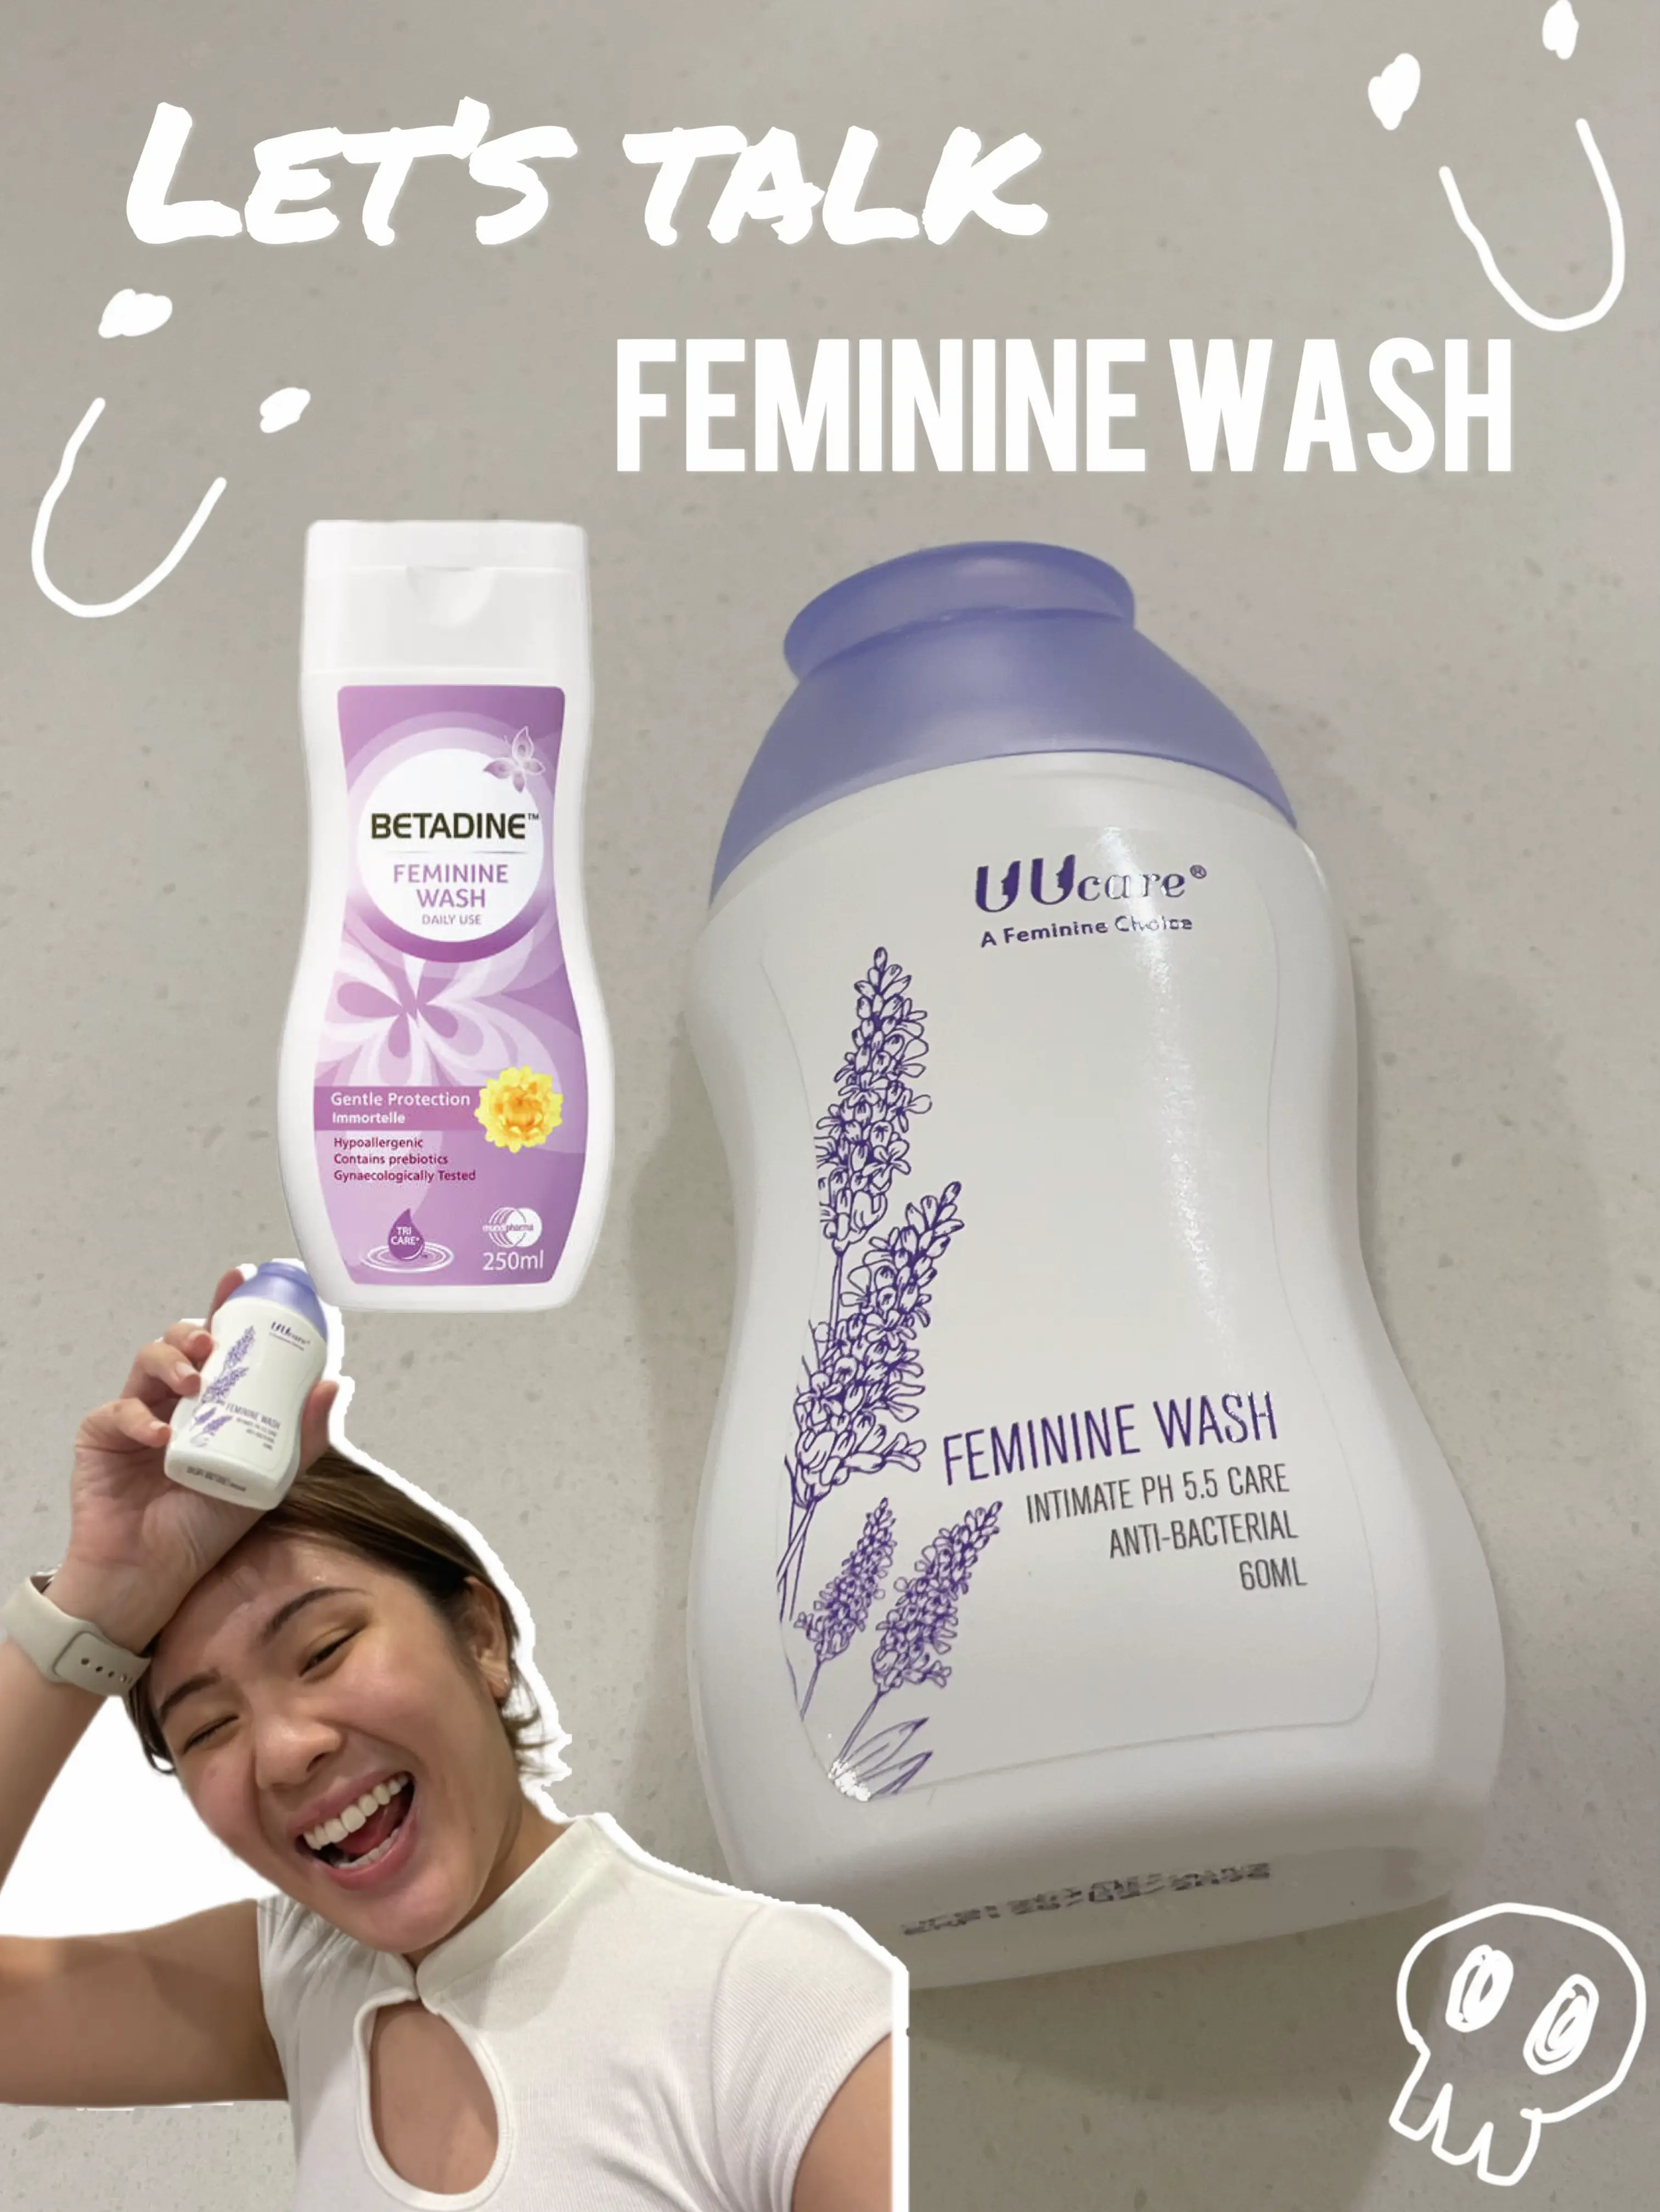 UU Care Feminine Wash